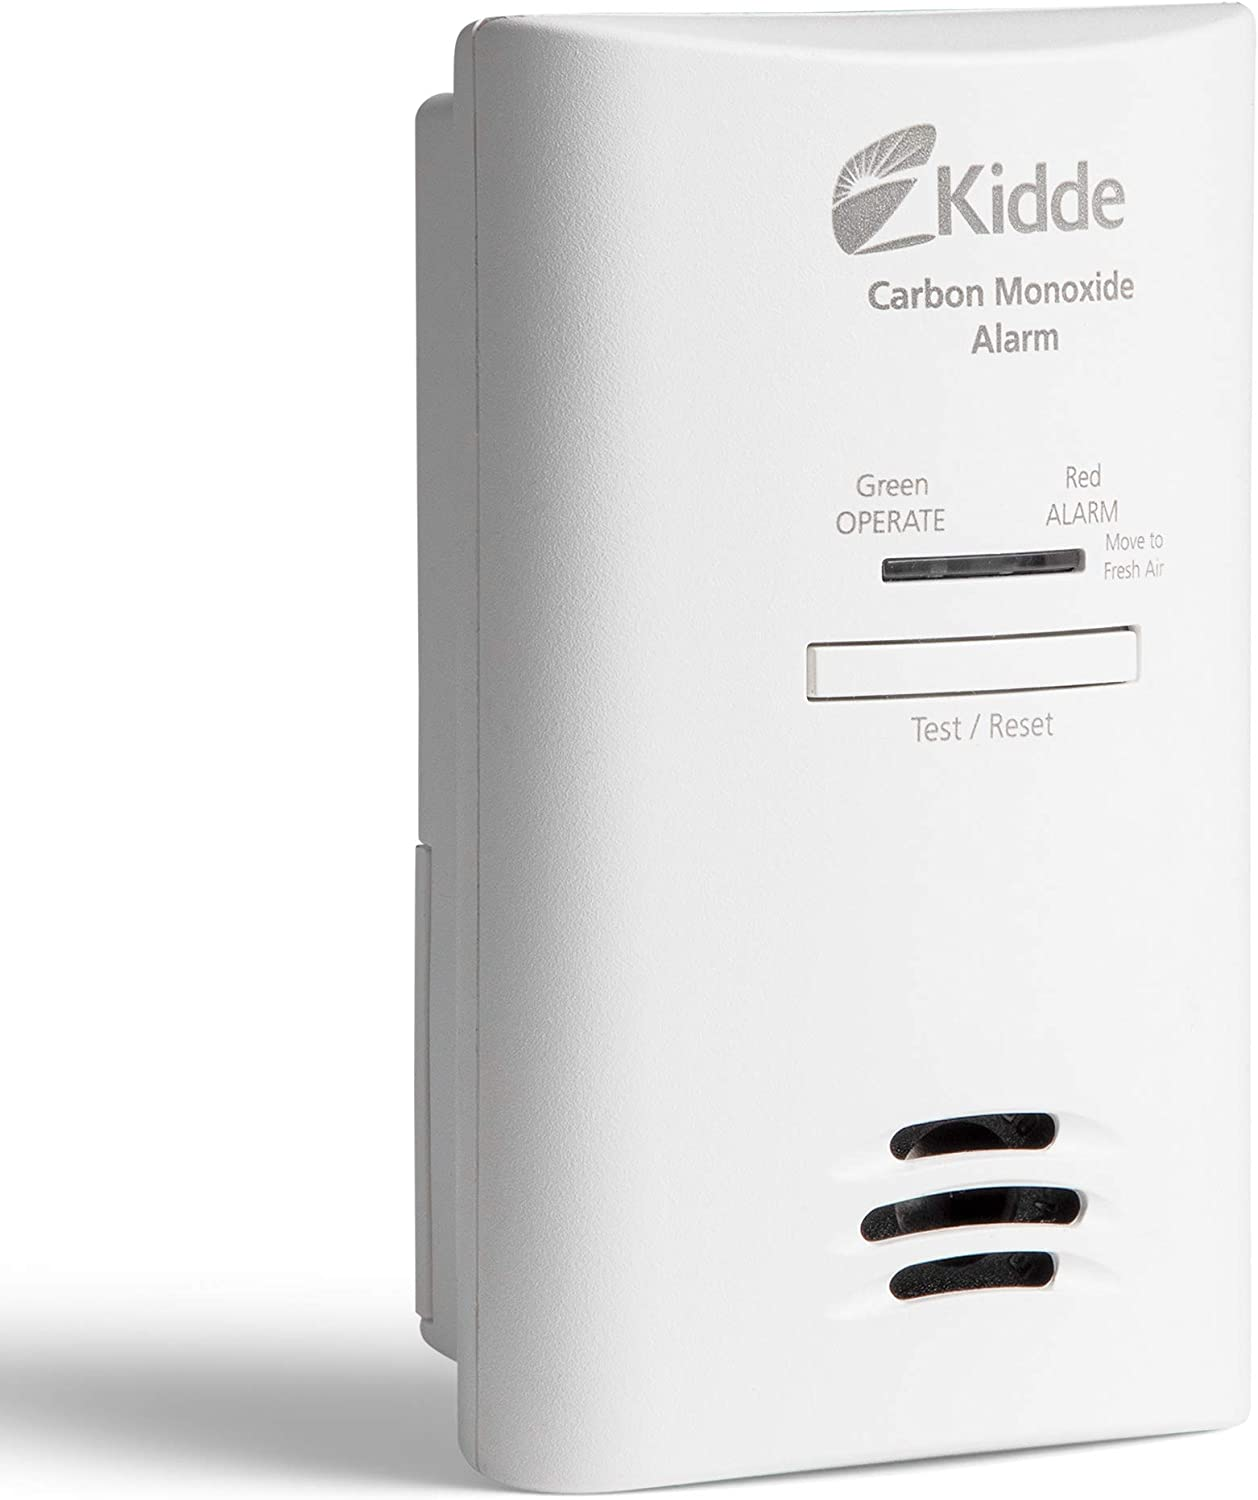 Kidde Carbon Monoxide Alarm.